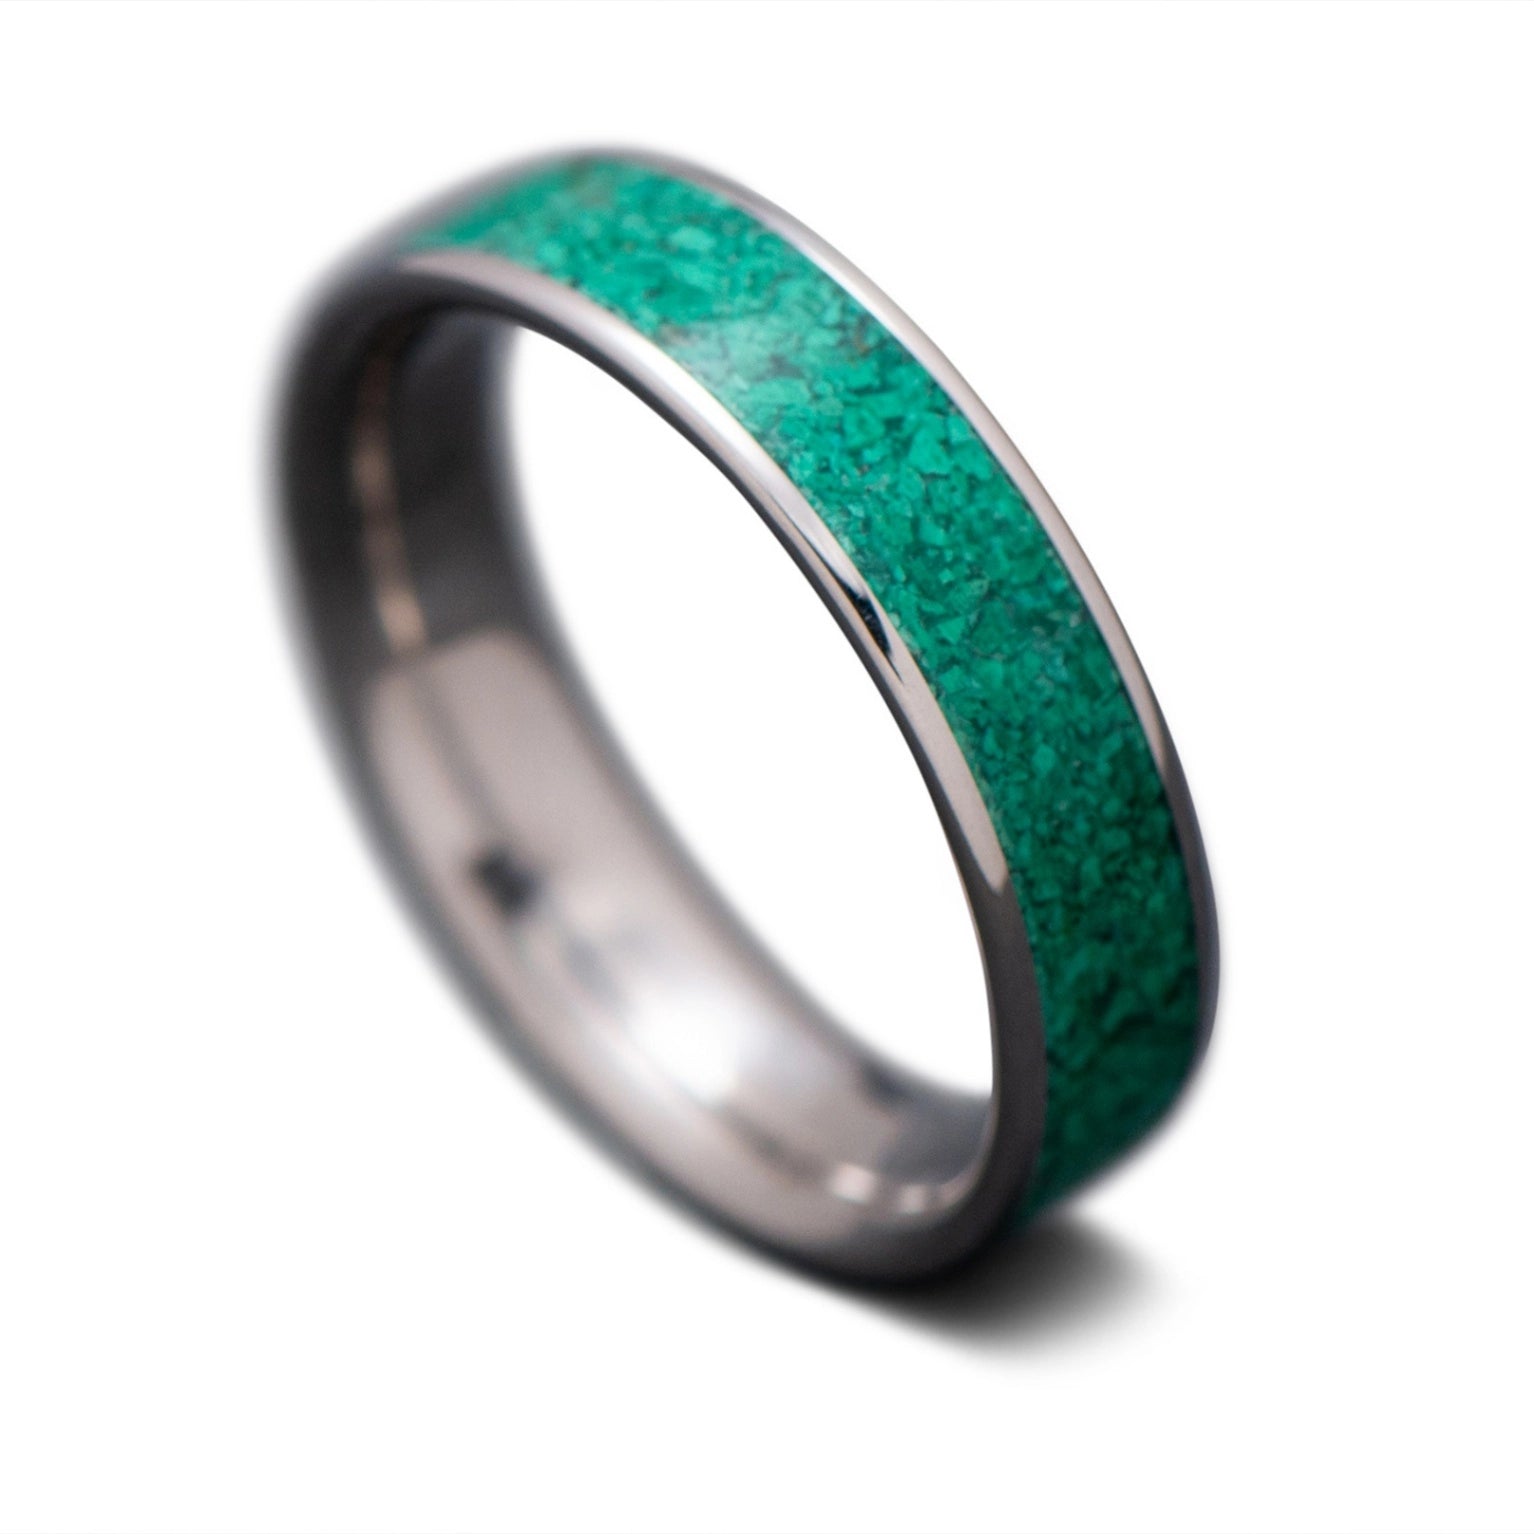  Titanium core ring with  Malachite inlay,  7mm -THE CORE